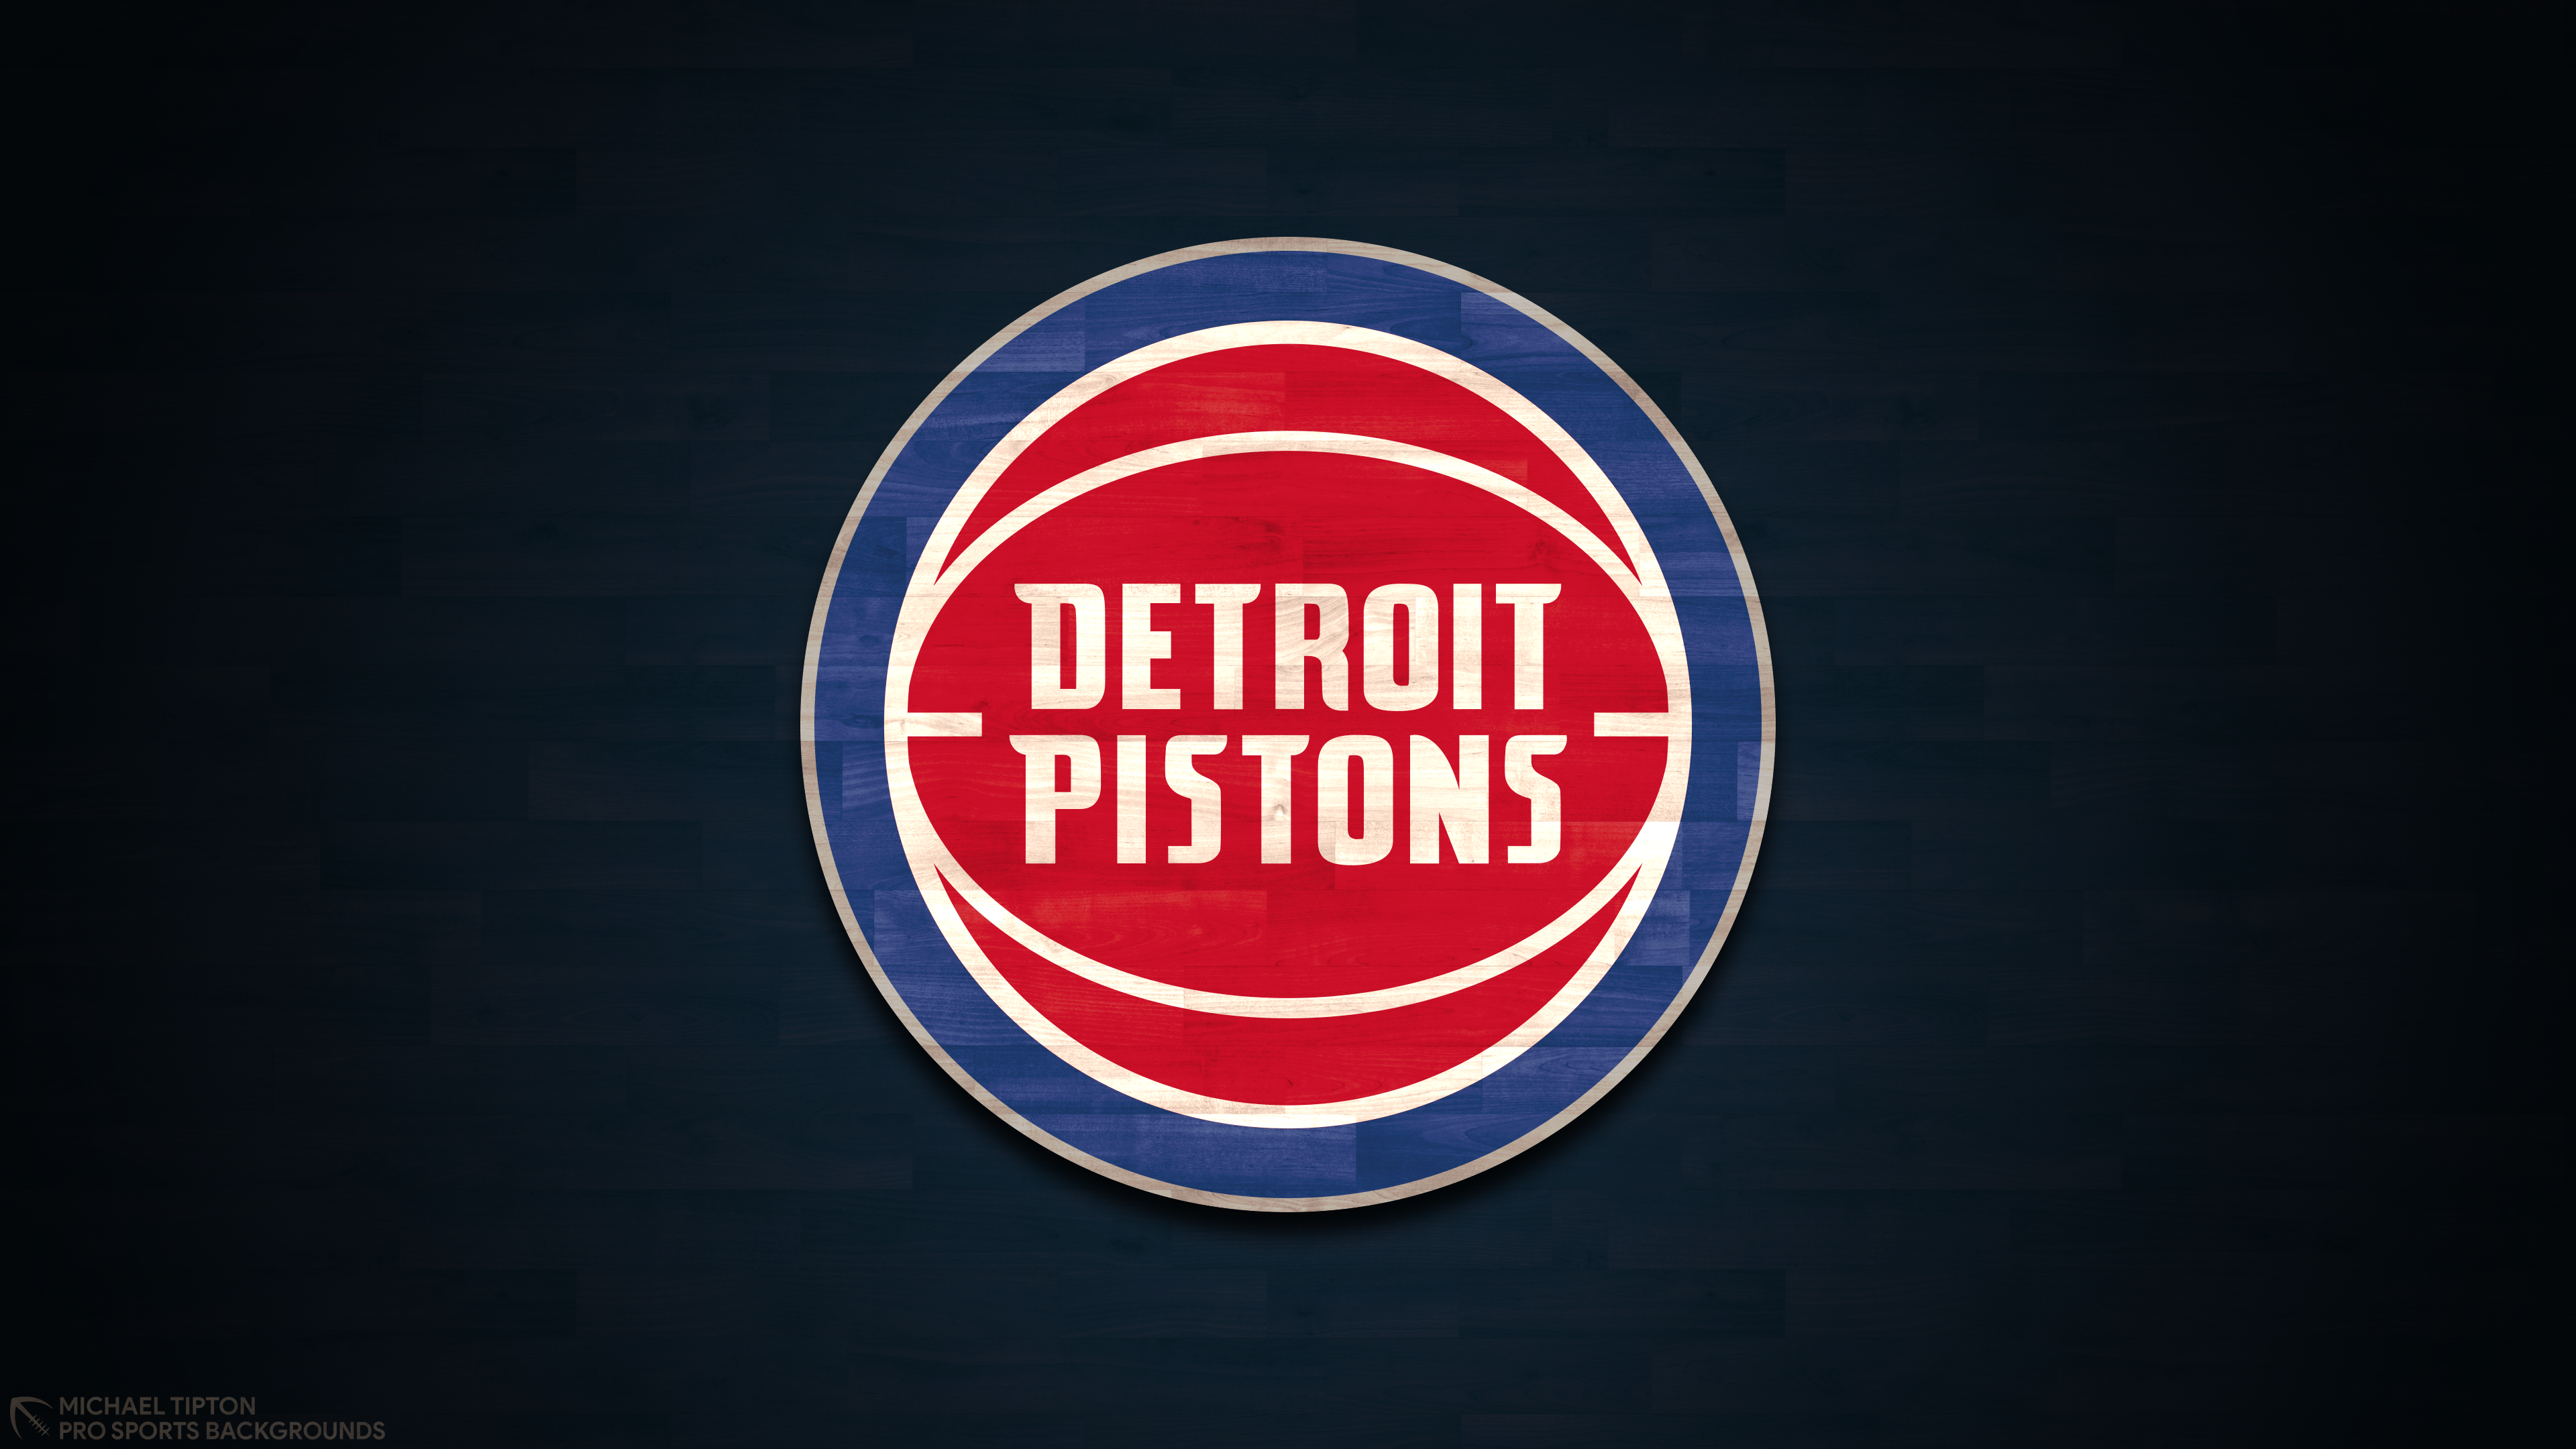 Detroit pistons. Детройт Пистонс логотип. Детройт Пистонс 90. Детройт логотип НБА. Новая эмблема Детройт Пистонс.